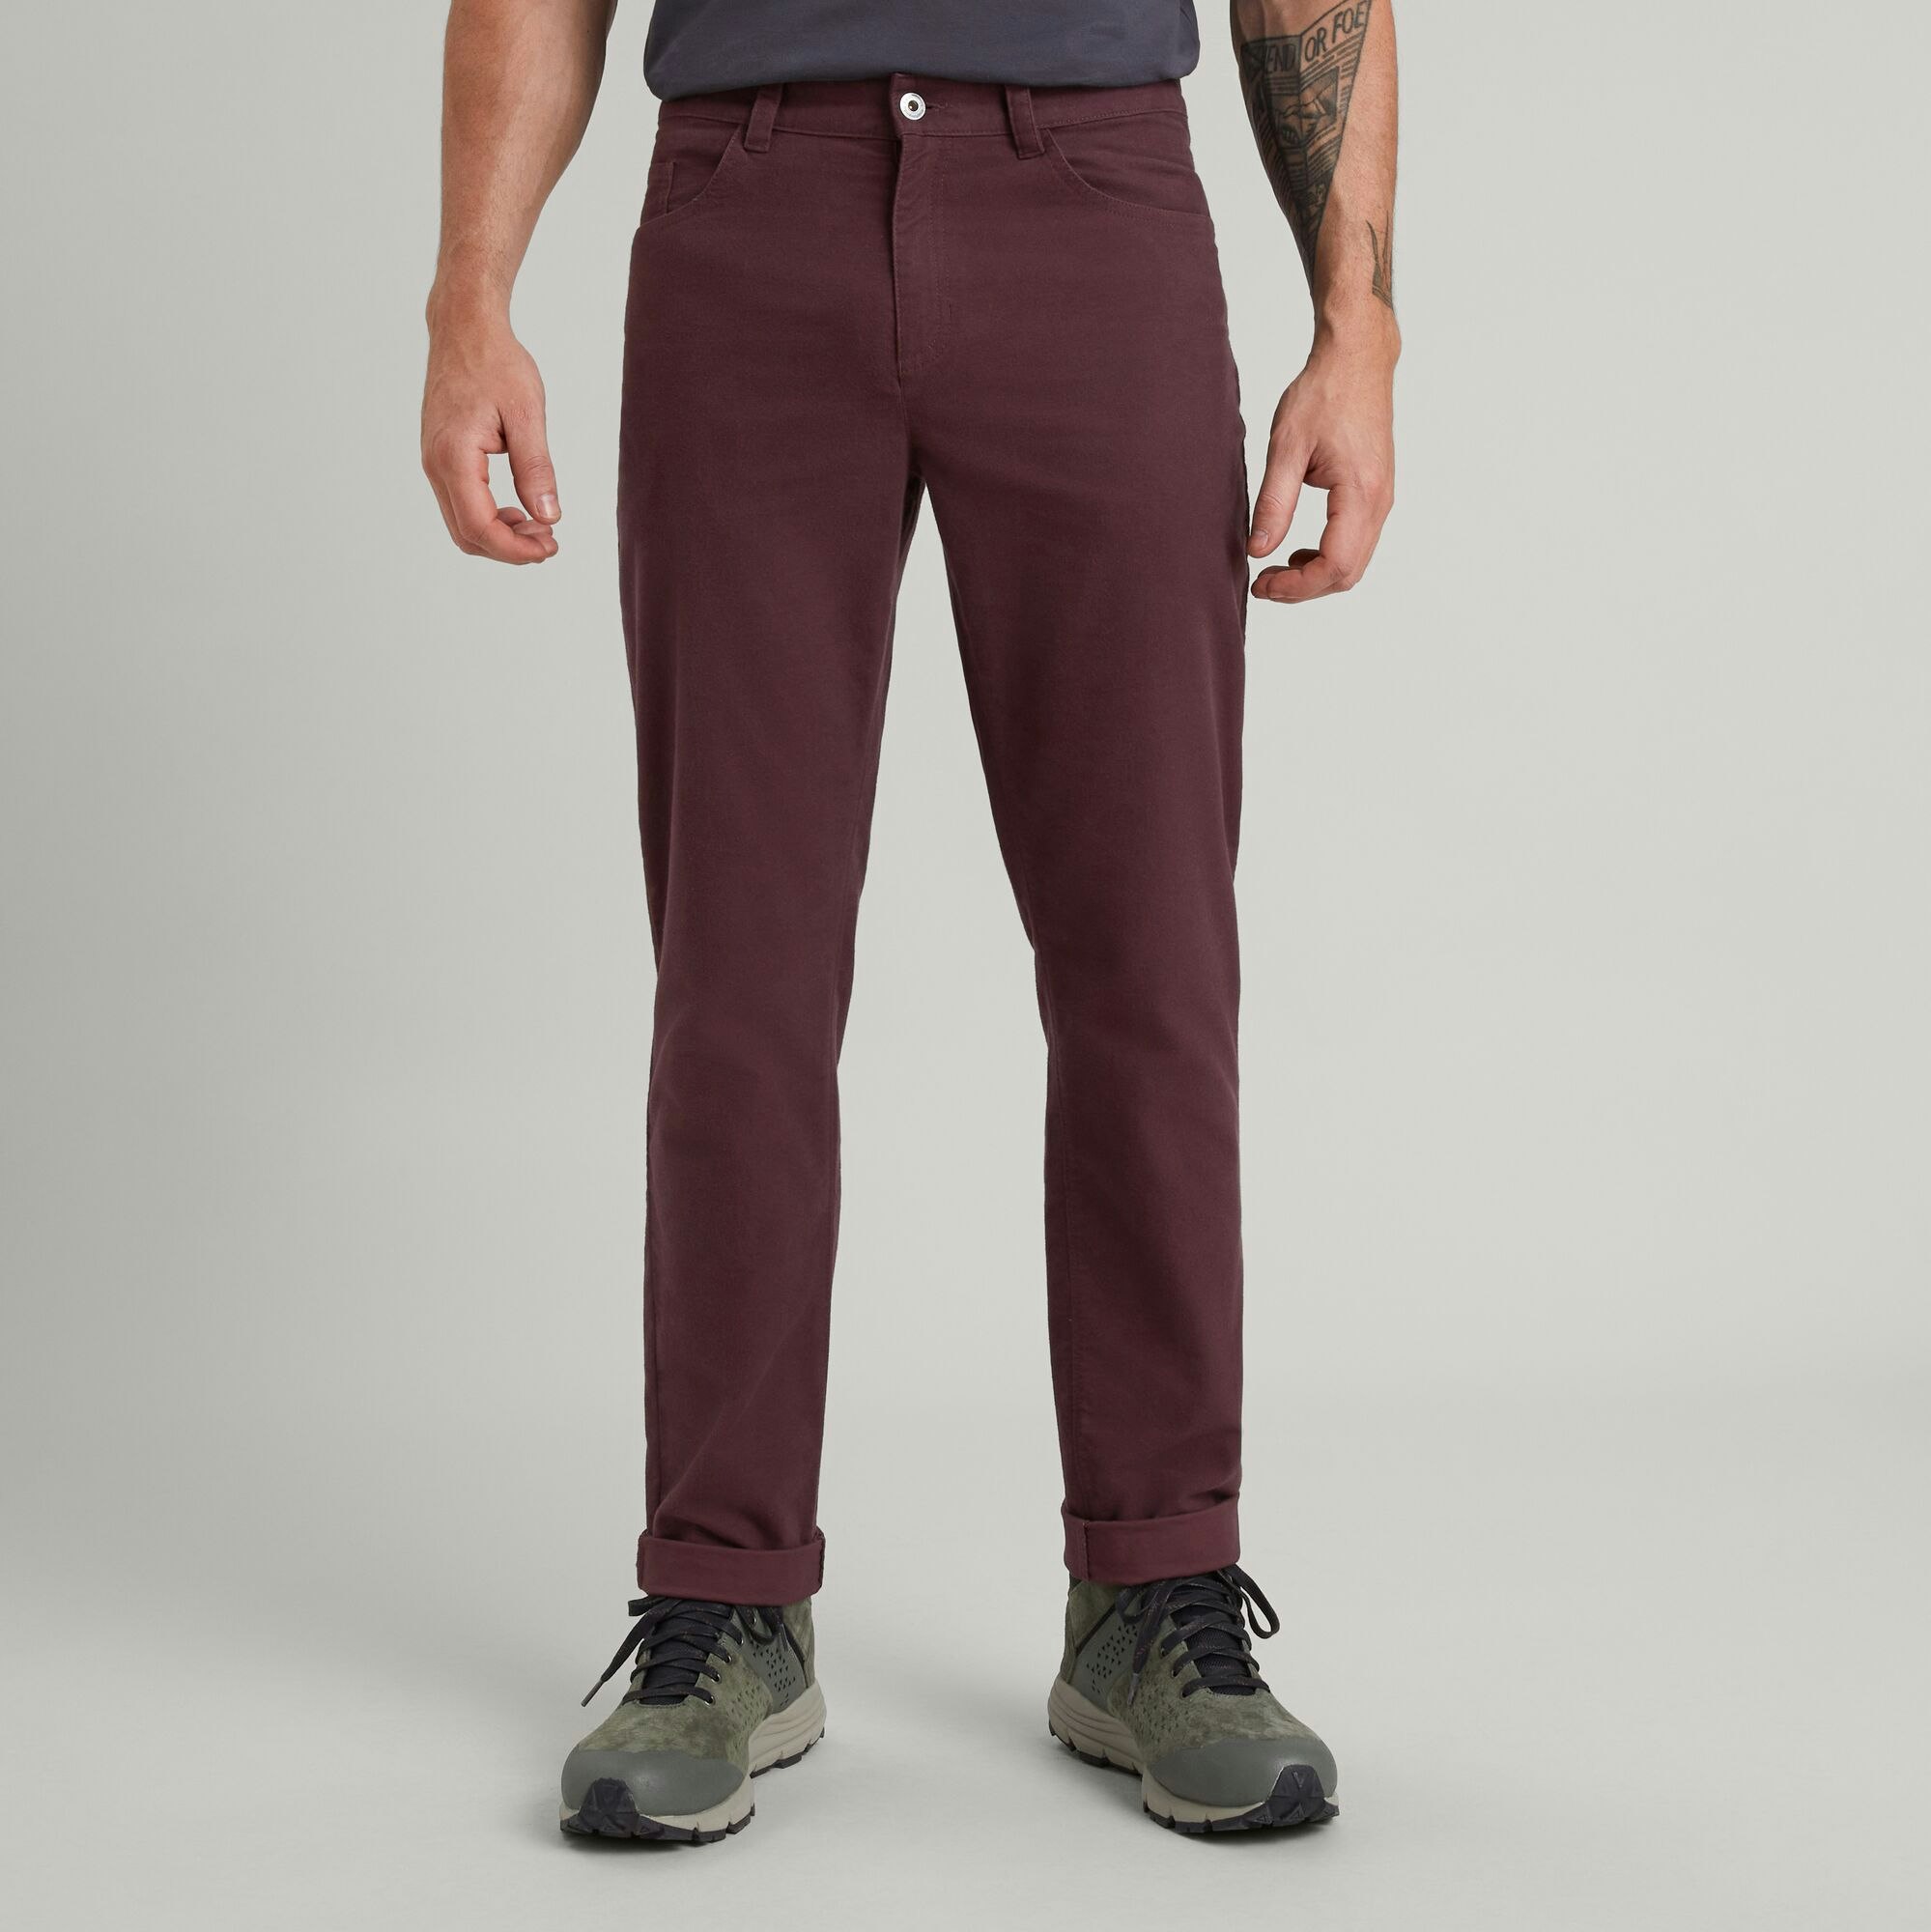 Hippie pants | Patchwork pants from Kathmandu | Wholesale